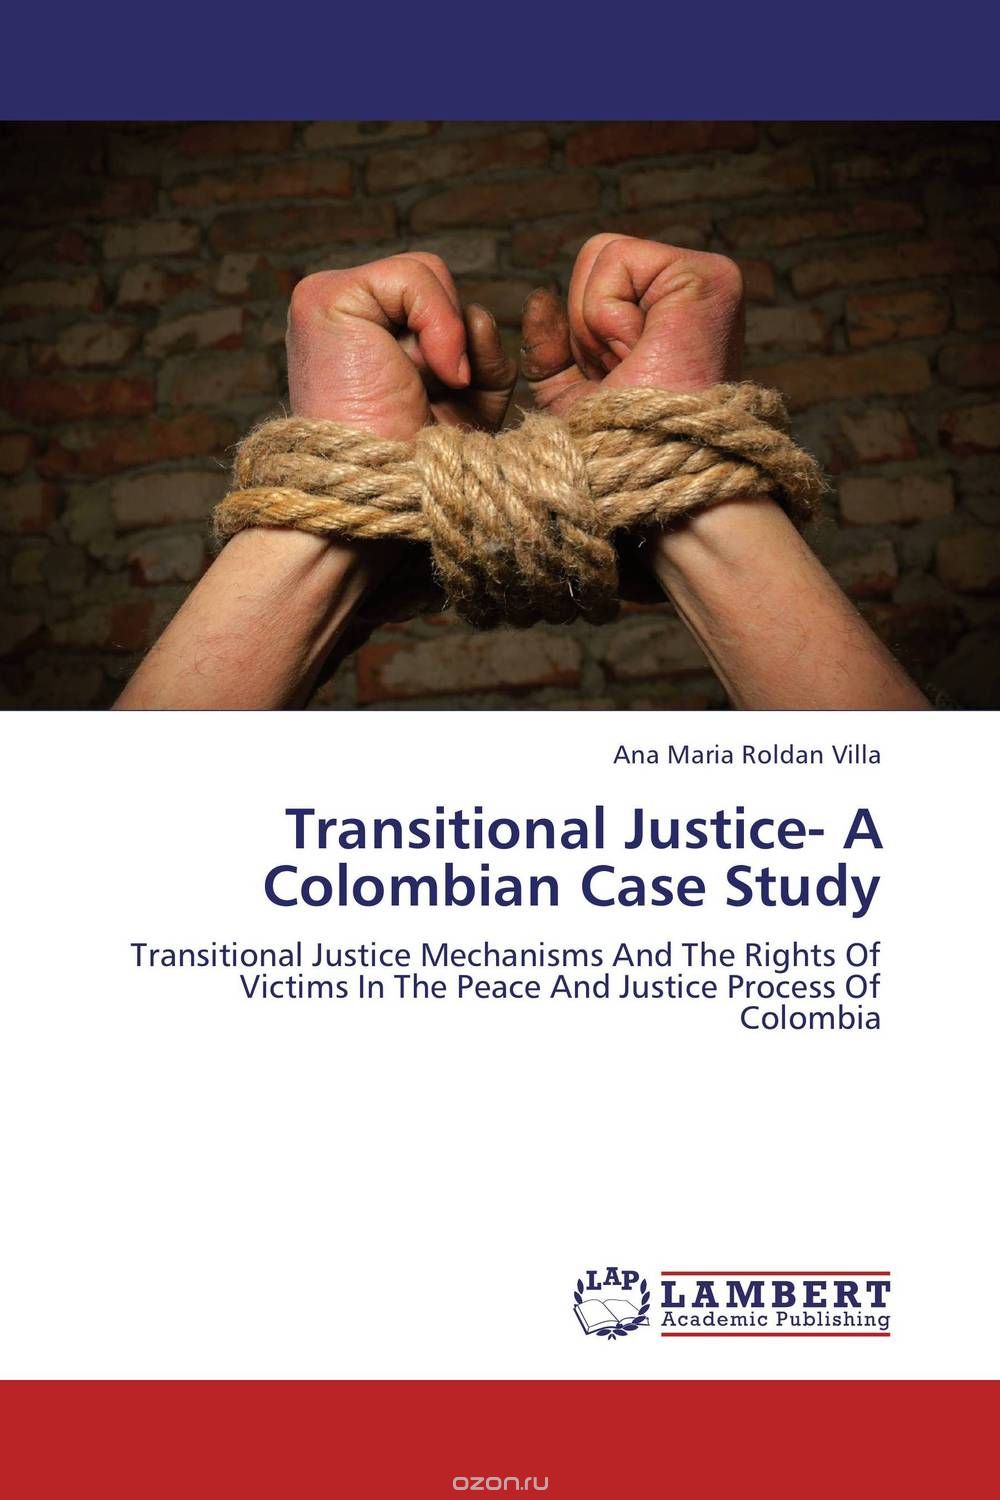 Скачать книгу "Transitional Justice- A Colombian Case Study"